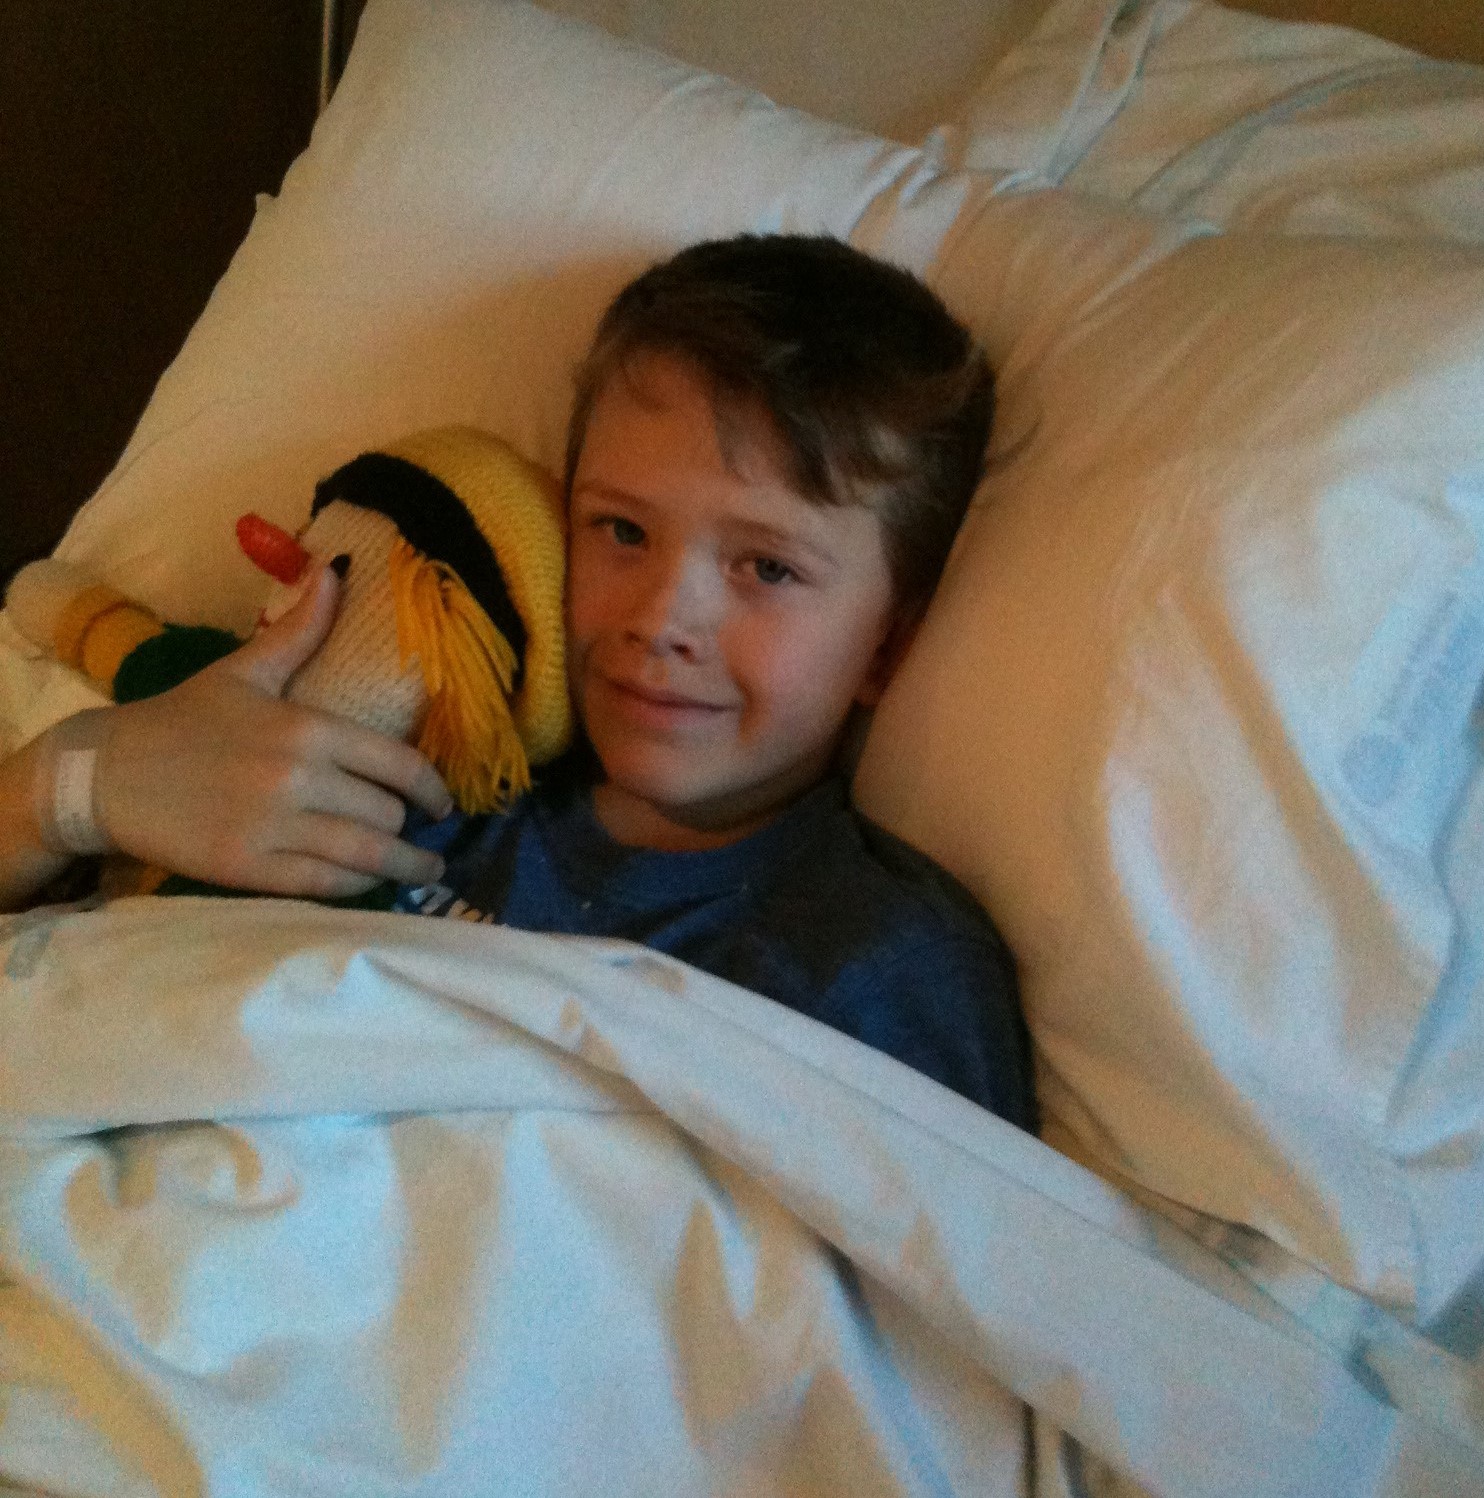 Nate in hospital bed cuddling a teddy